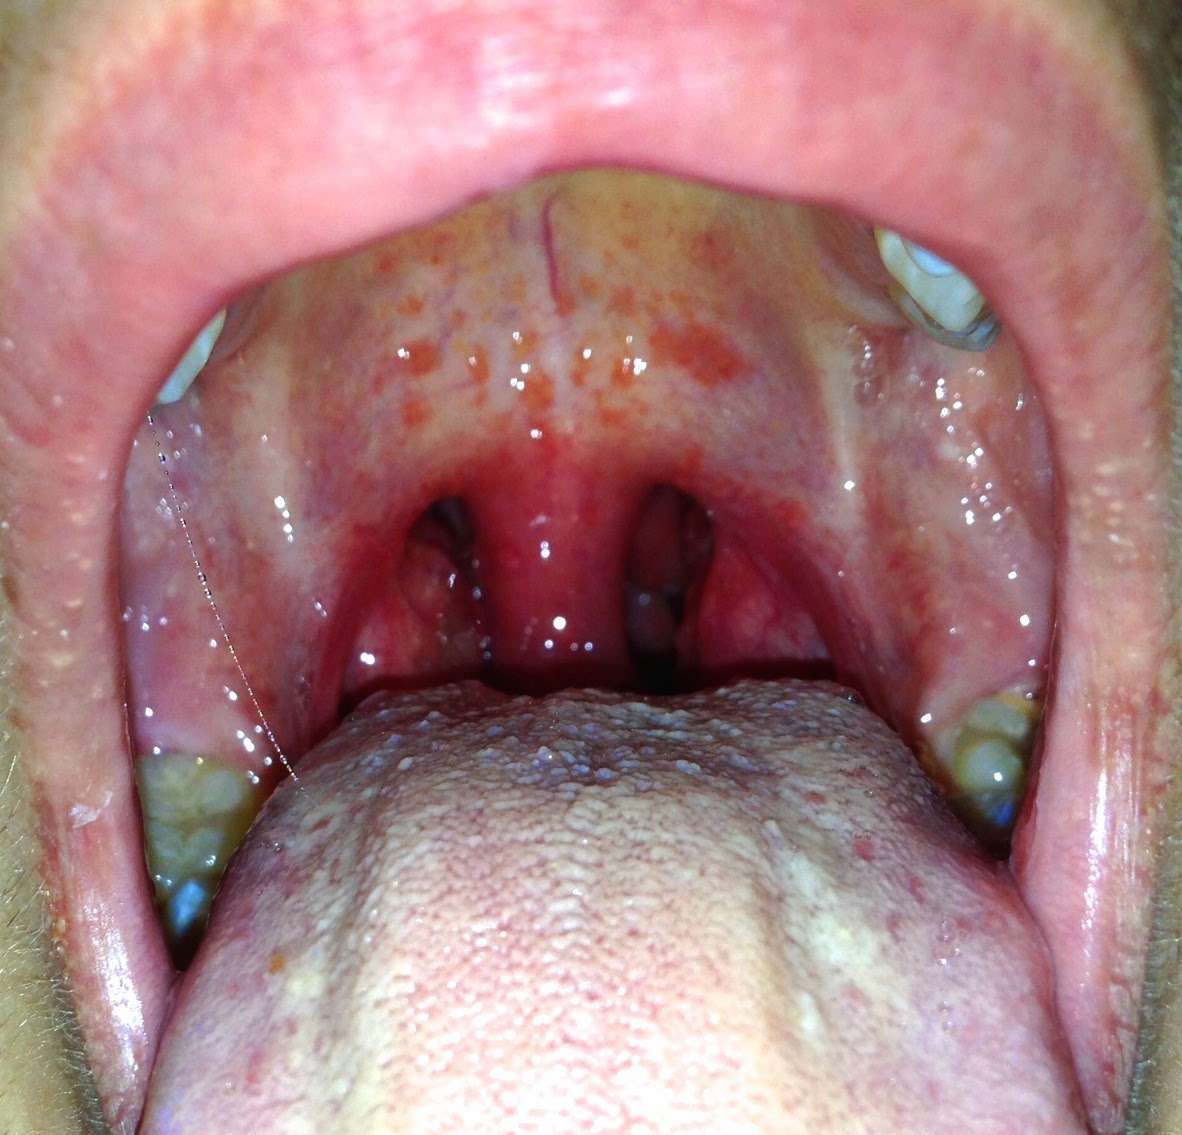 Is This Strep Throat? â Dr. Jill Grimes